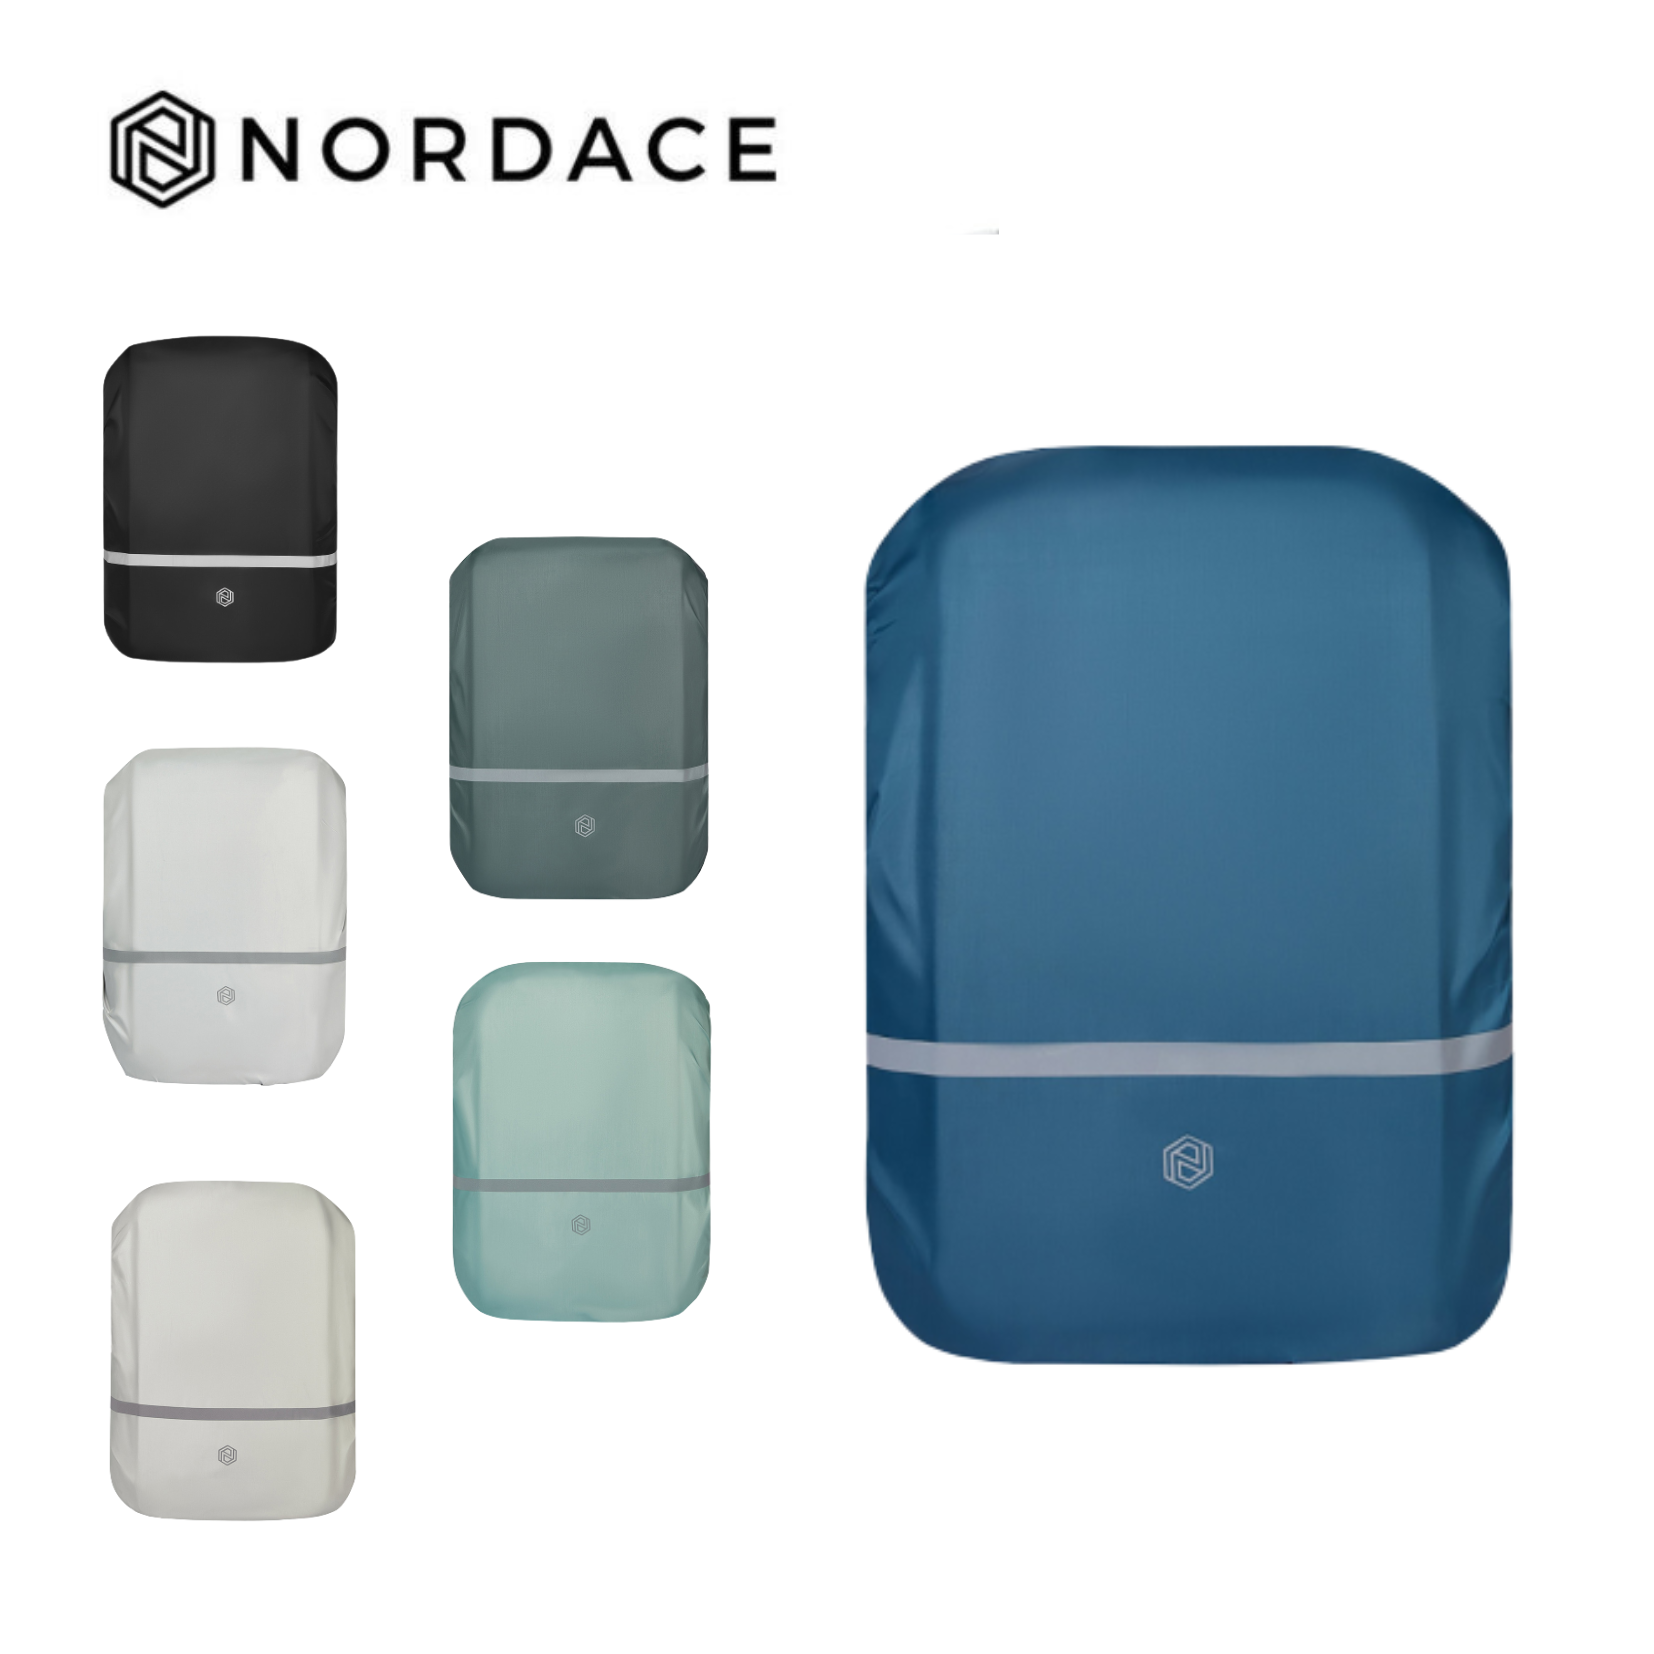 Nordace 防雨罩 背包套 防水套 防水罩 背包罩 適用於20L至40L的背包- 6色可選-藍色